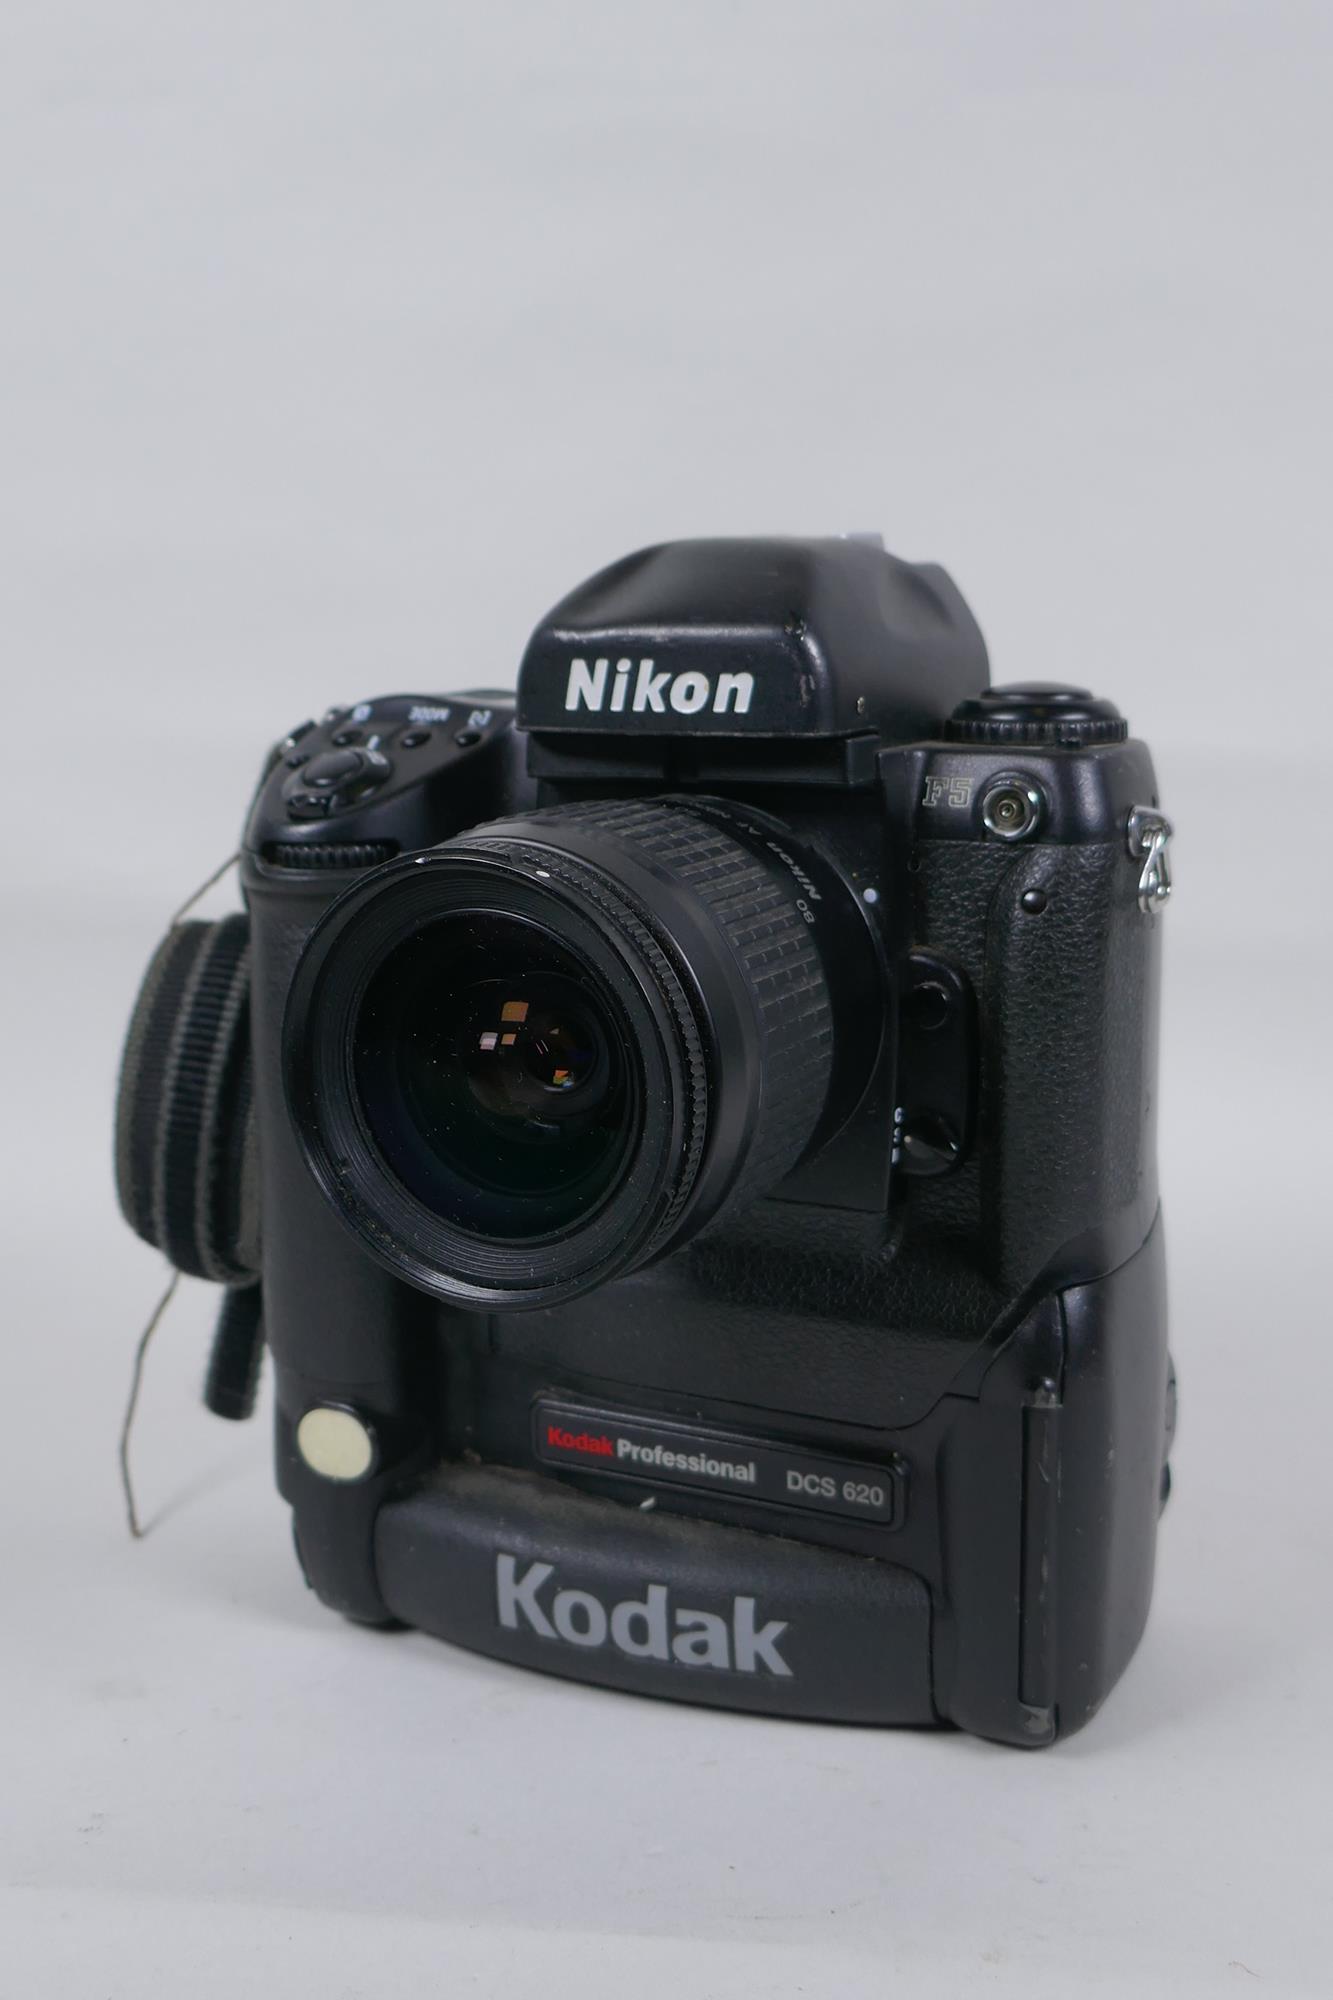 A Nikon F5 Kodak Professional DCS 620 digital camera, fitted with an AF Nikkor 28-80mm lens,